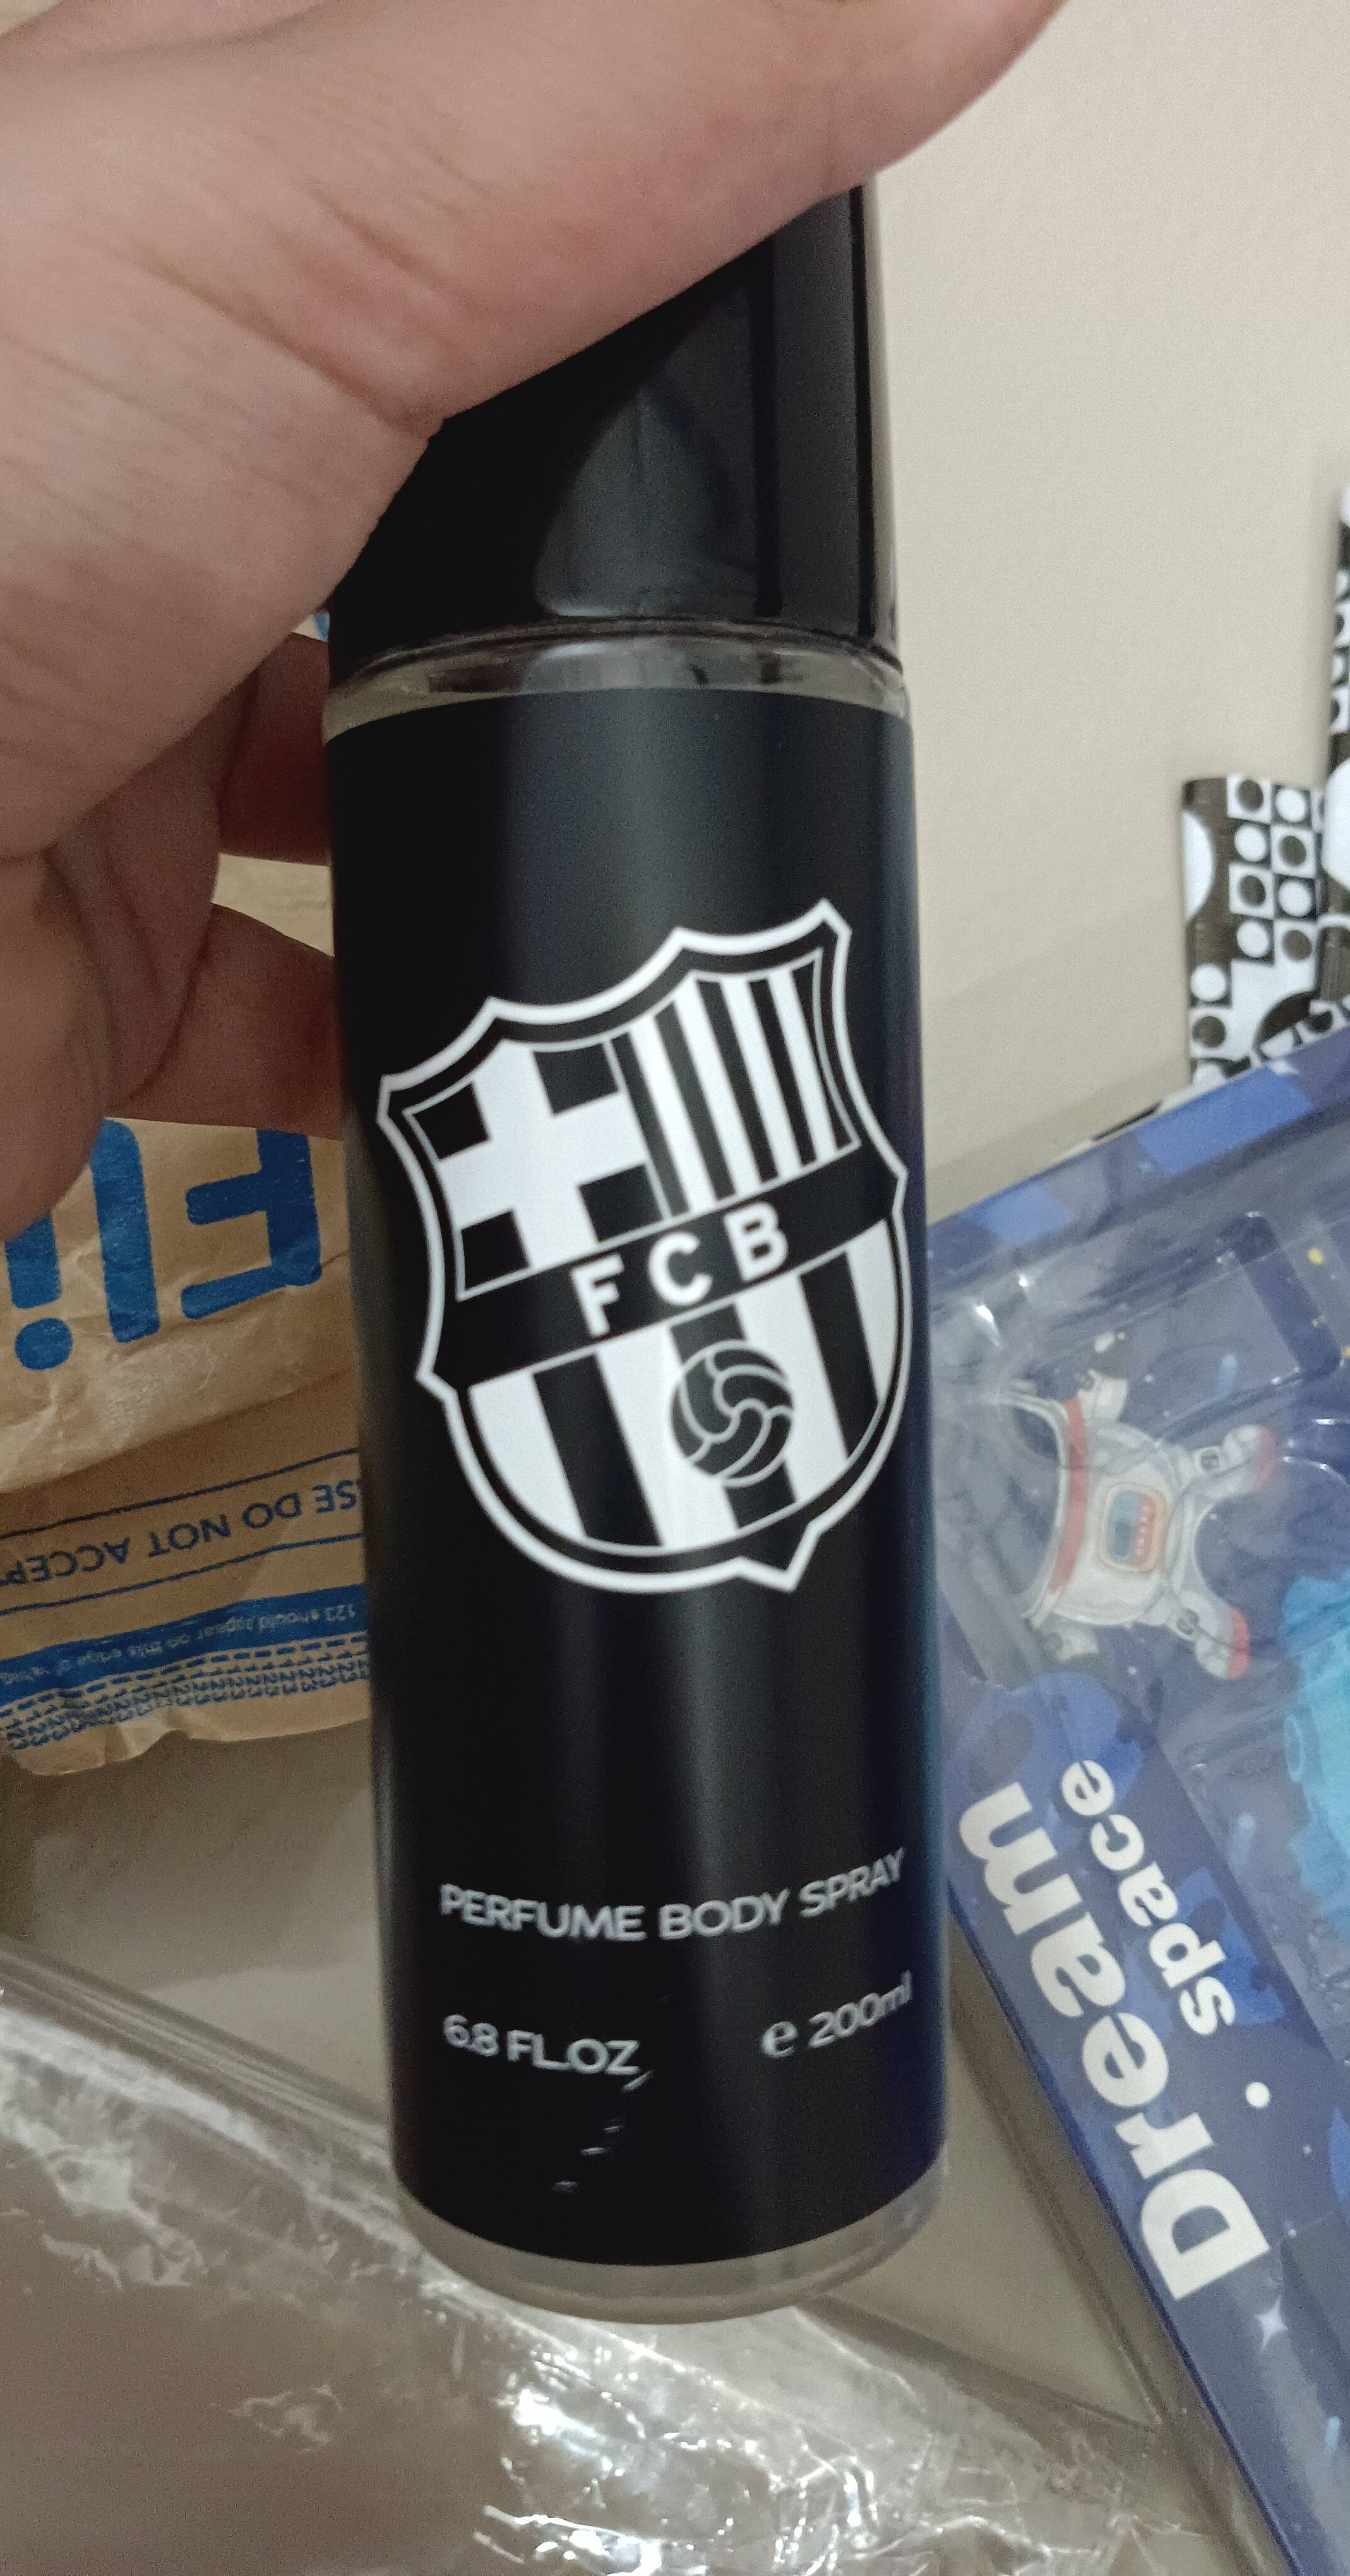 FCB perfume body spray - Produit - en